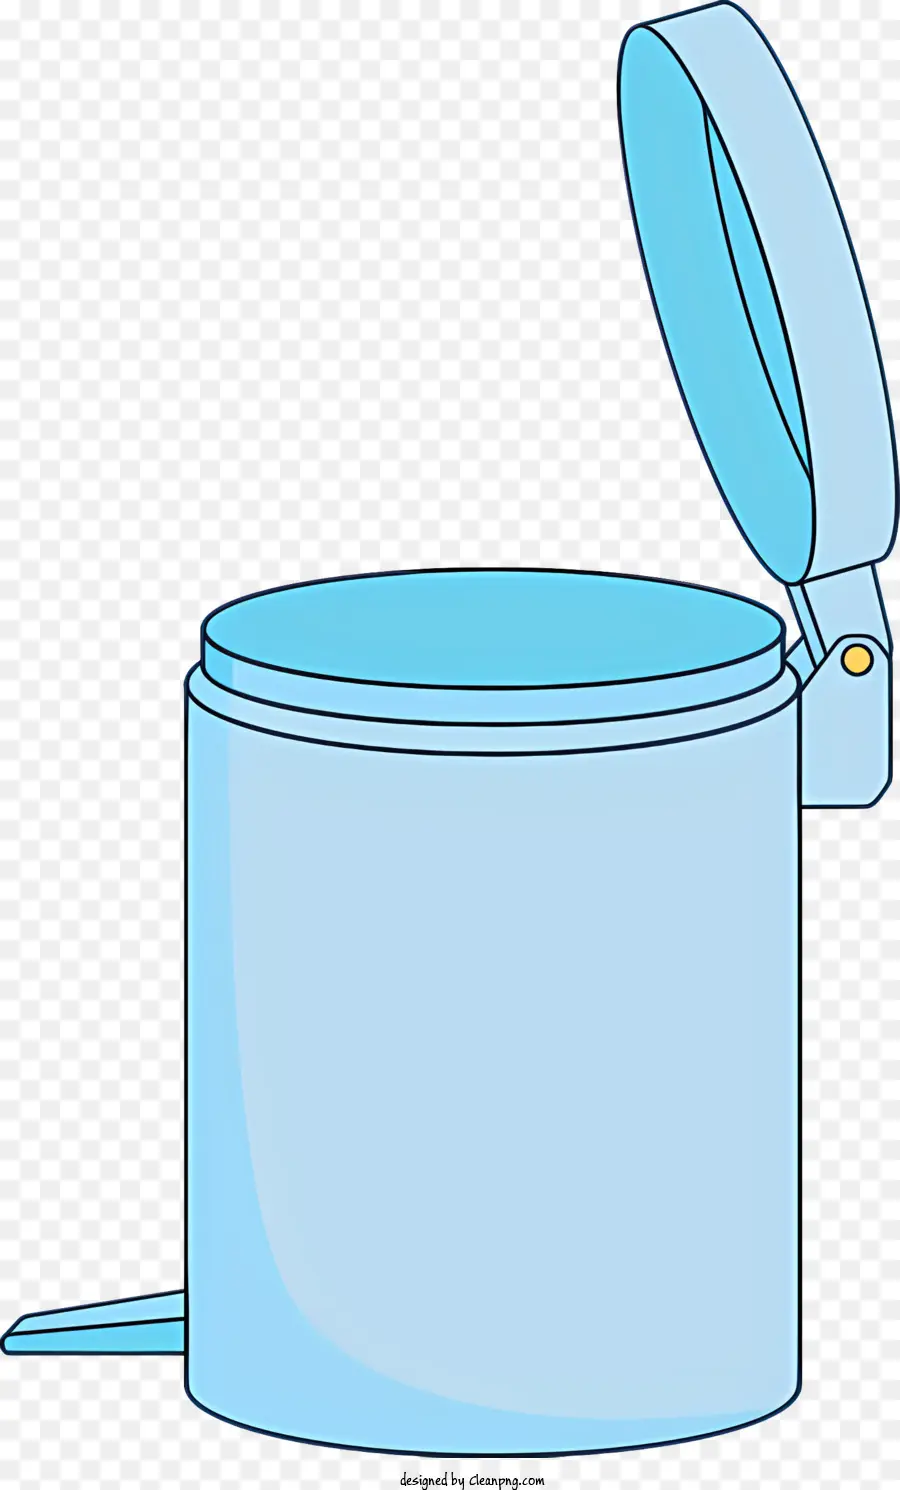 bubble gum cartoon trash can blue plastic trash can open lid trash can trash can contents